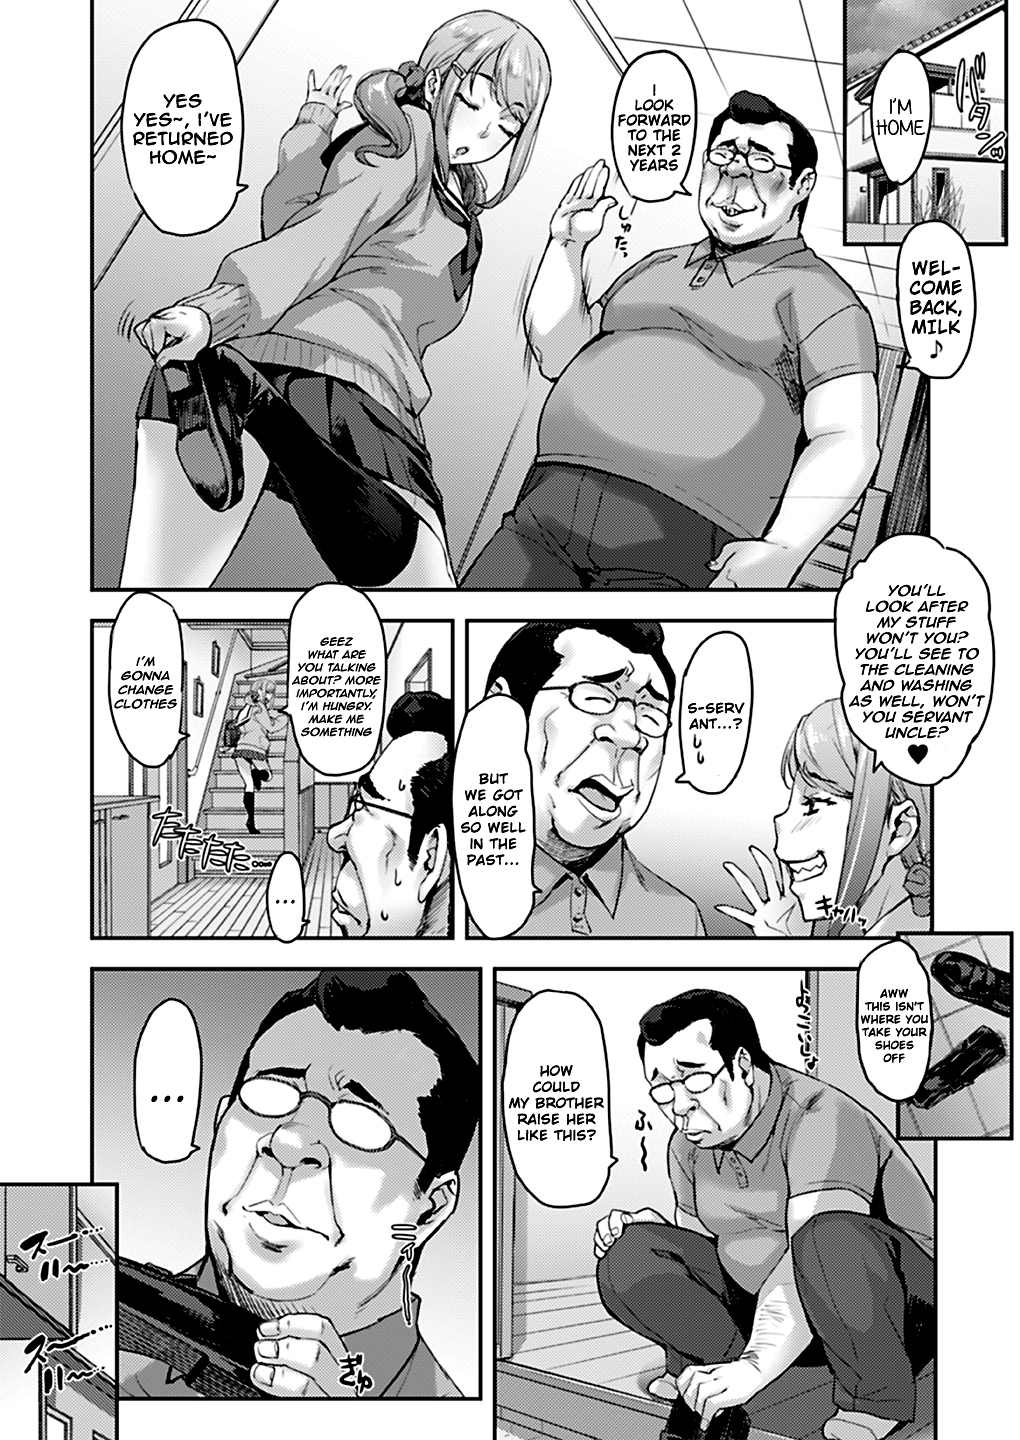 Dirty uncle fucks in his busty schoolgirl niece in nasty sex comics - 34  Pics | Hentai City